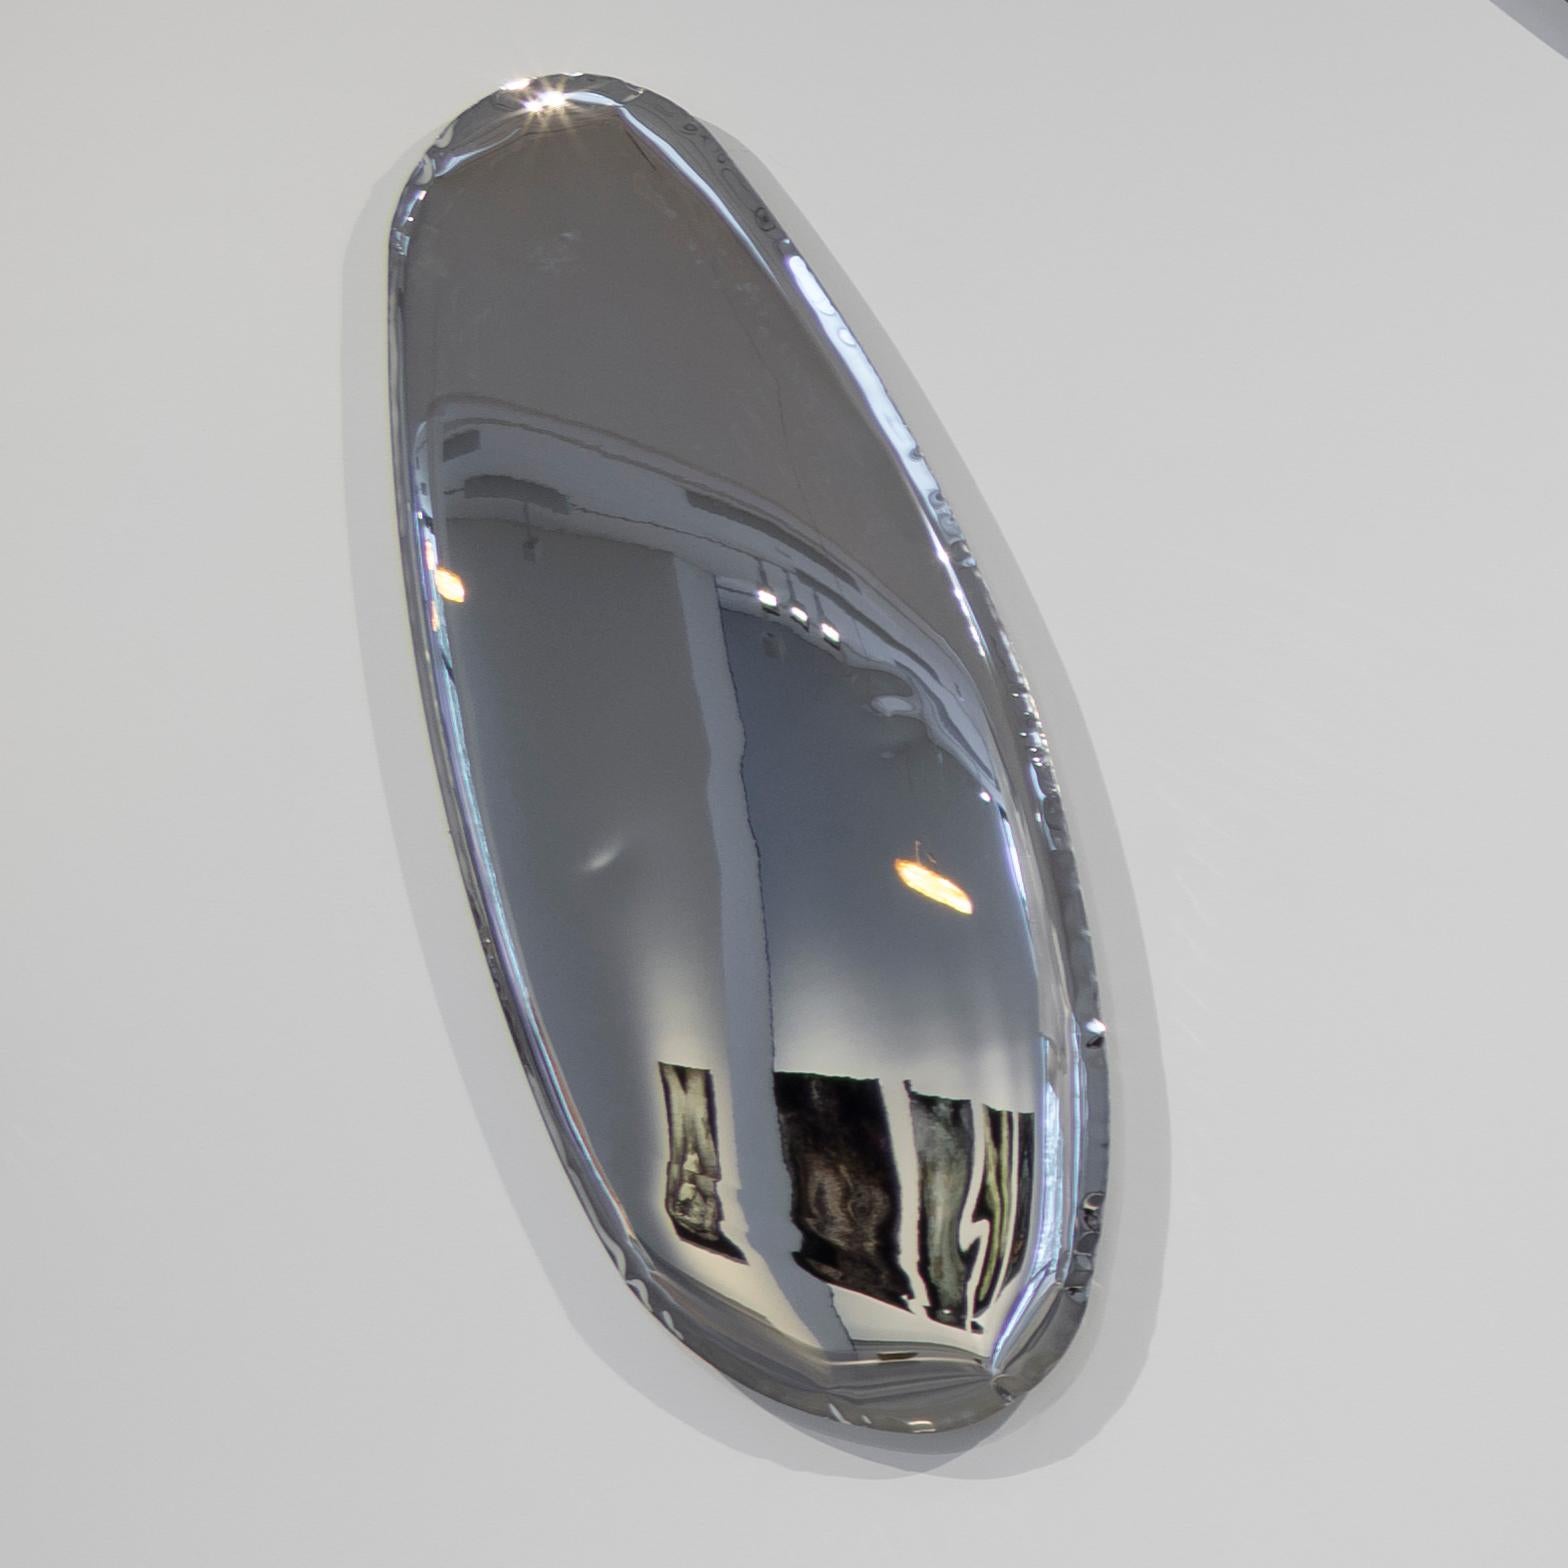 Polish Contemporary Mirror 'Tafla O5' in Stainless Steel by Zieta Prozessdesign